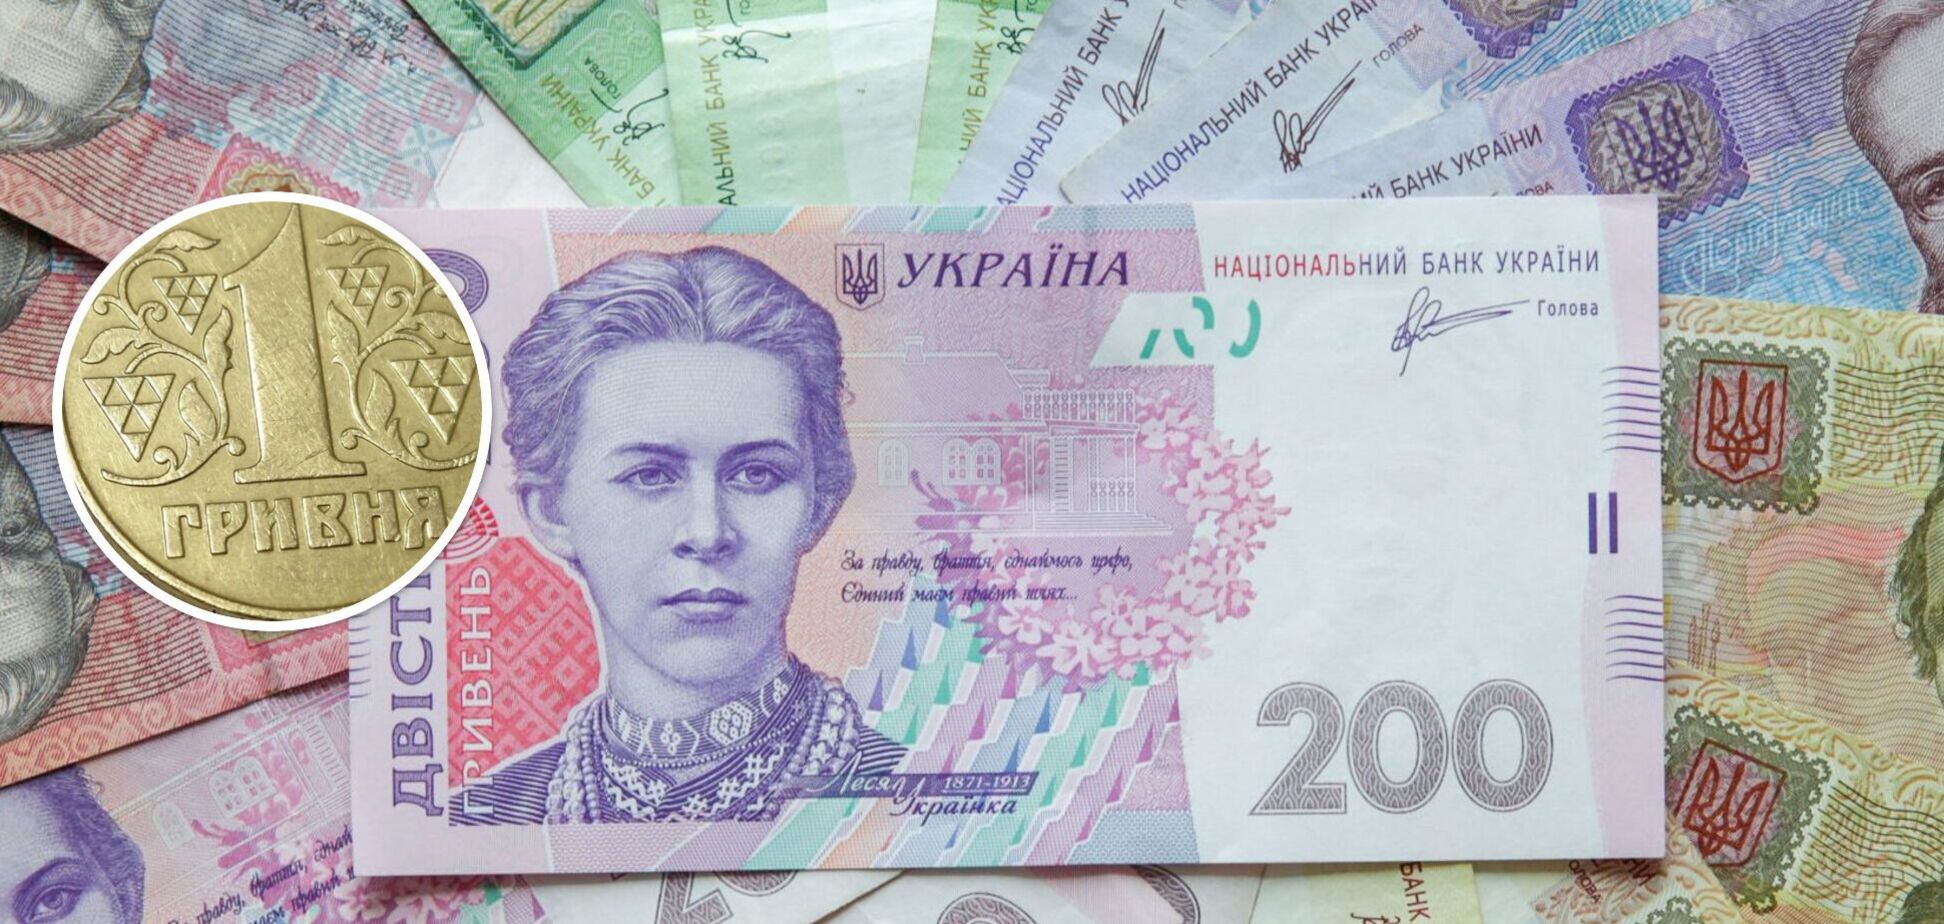 Цена на украинскую монету в 1 грн на аукционе выросла в 12 тыс. раз